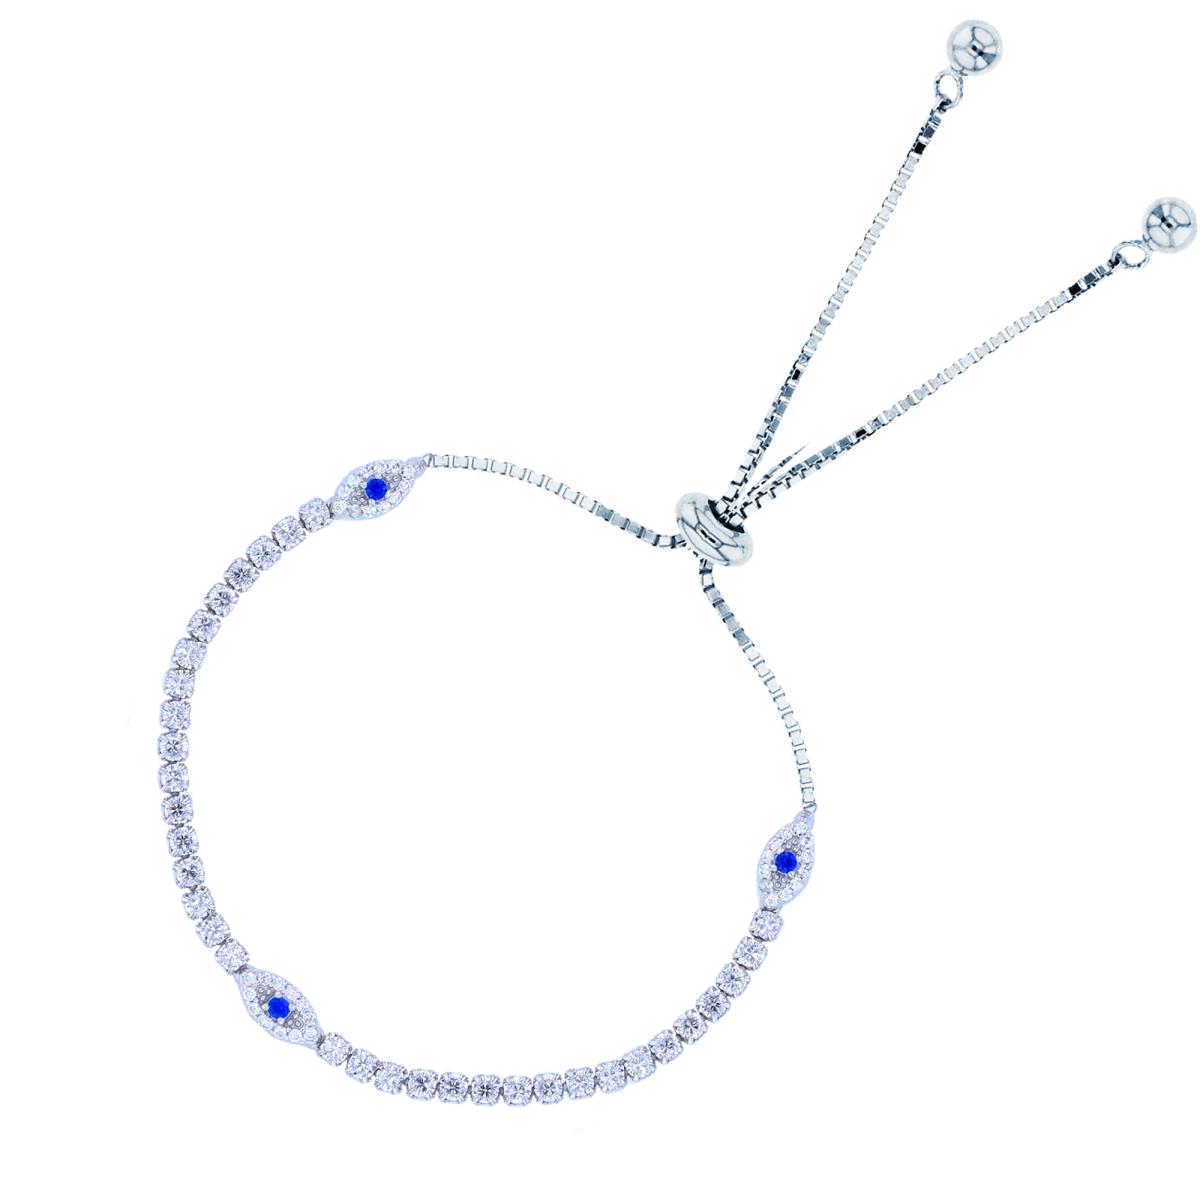 Sterling Silver Rhodium Rnd White & #113 Blue Spinel CZ Evil Eye Single Row Adjustable Bolo Bracelet